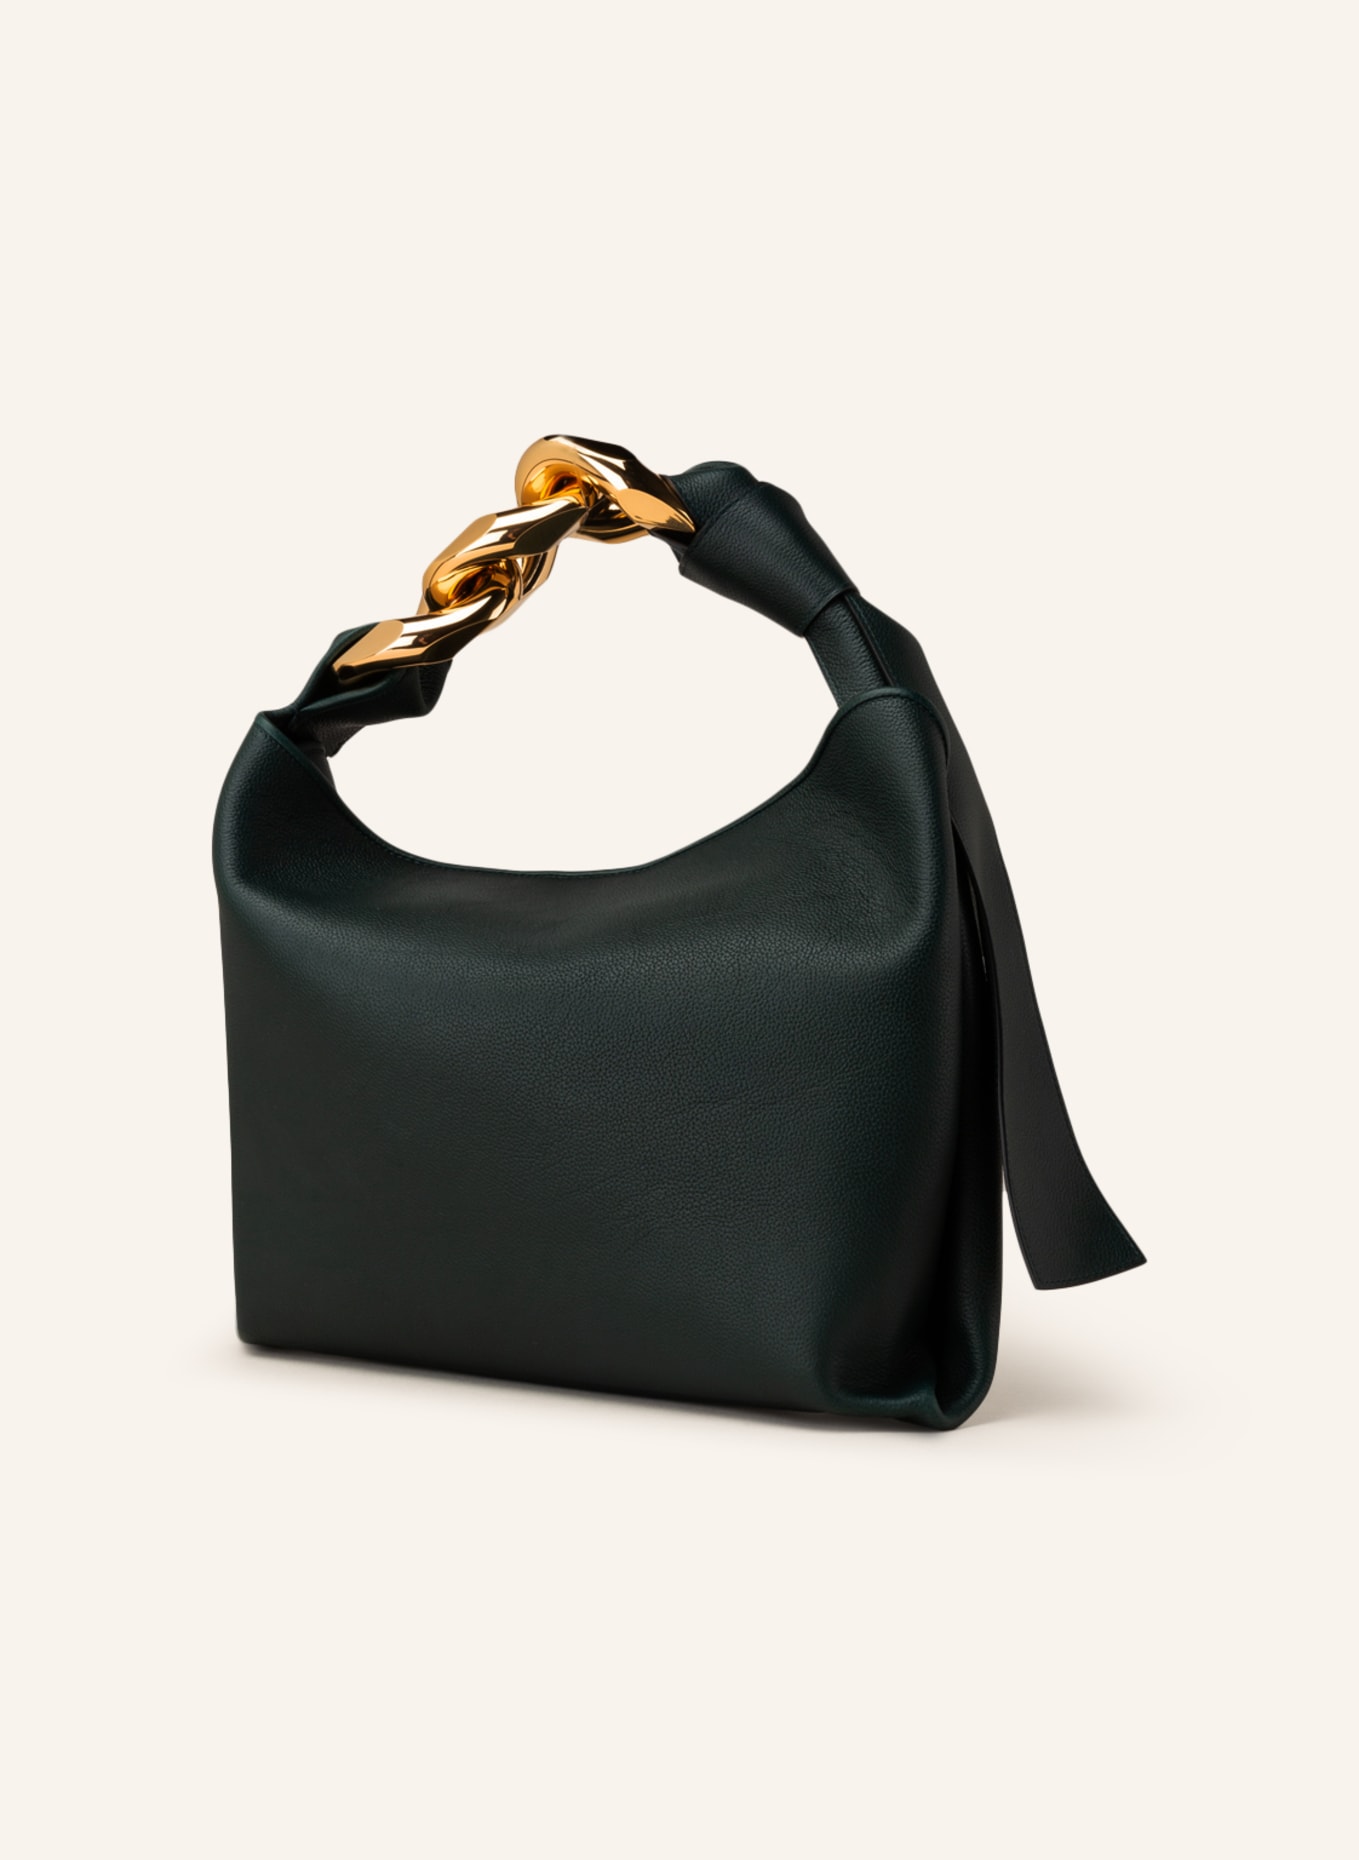 JW ANDERSON Handtasche SMALL CHAIN HOBO , Farbe: DUNKELGRÜN (Bild 2)